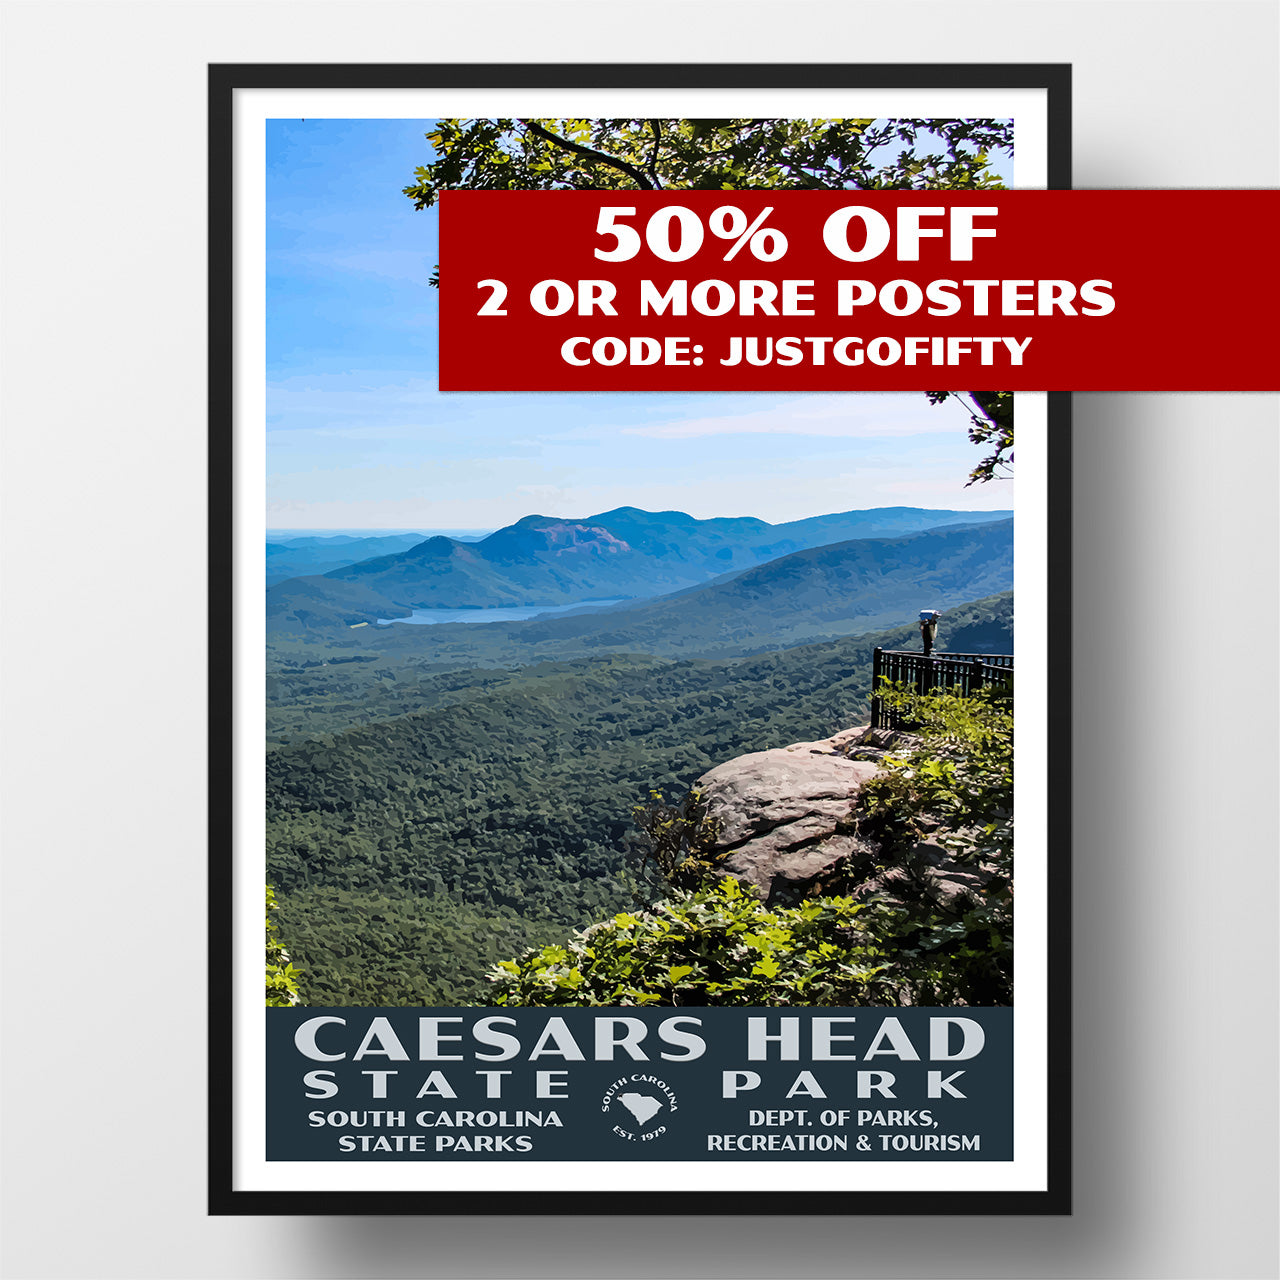 Caesars Head State Park poster